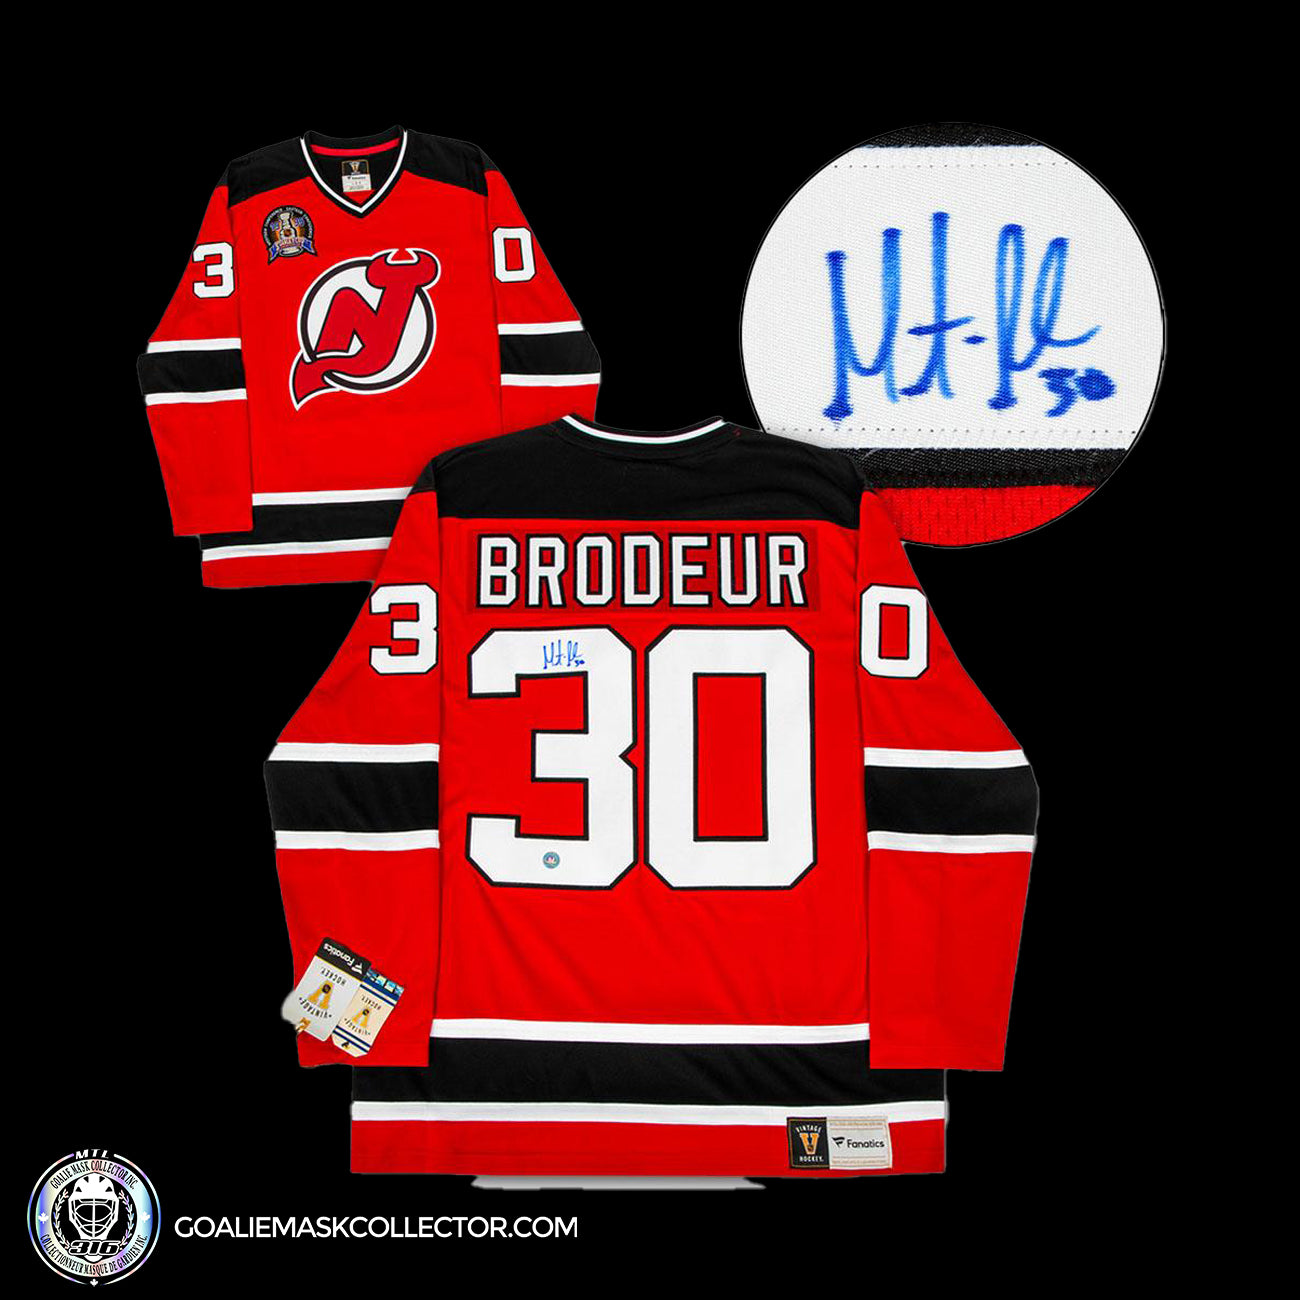 Martin Brodeur New Jersey Devils Fanatics Authentic Autographed